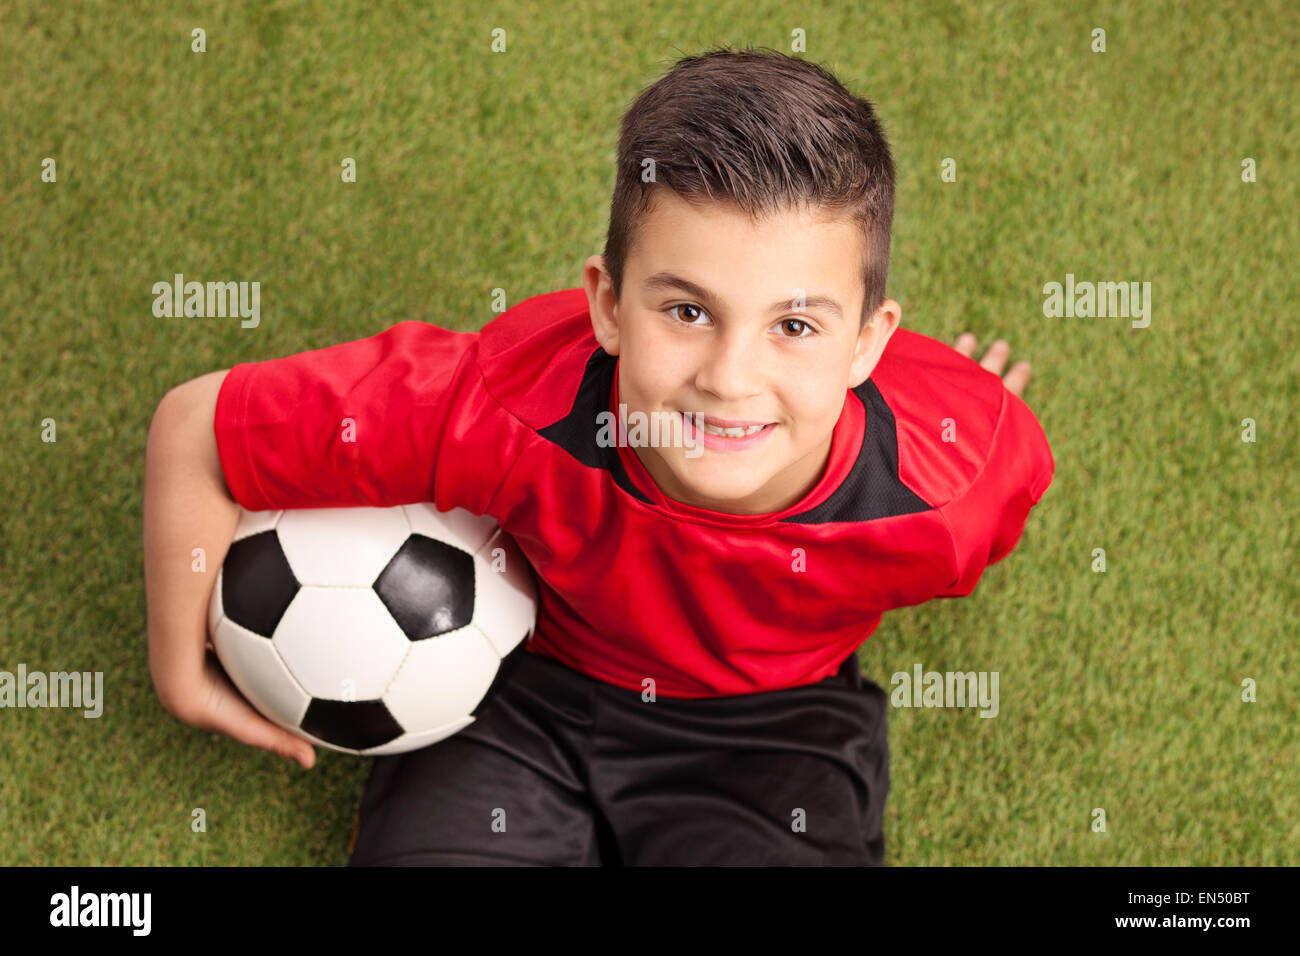 High angle shot d'un joueur de football junior dans un maillot rouge sitting on grass holding a ball and smiling Banque D'Images